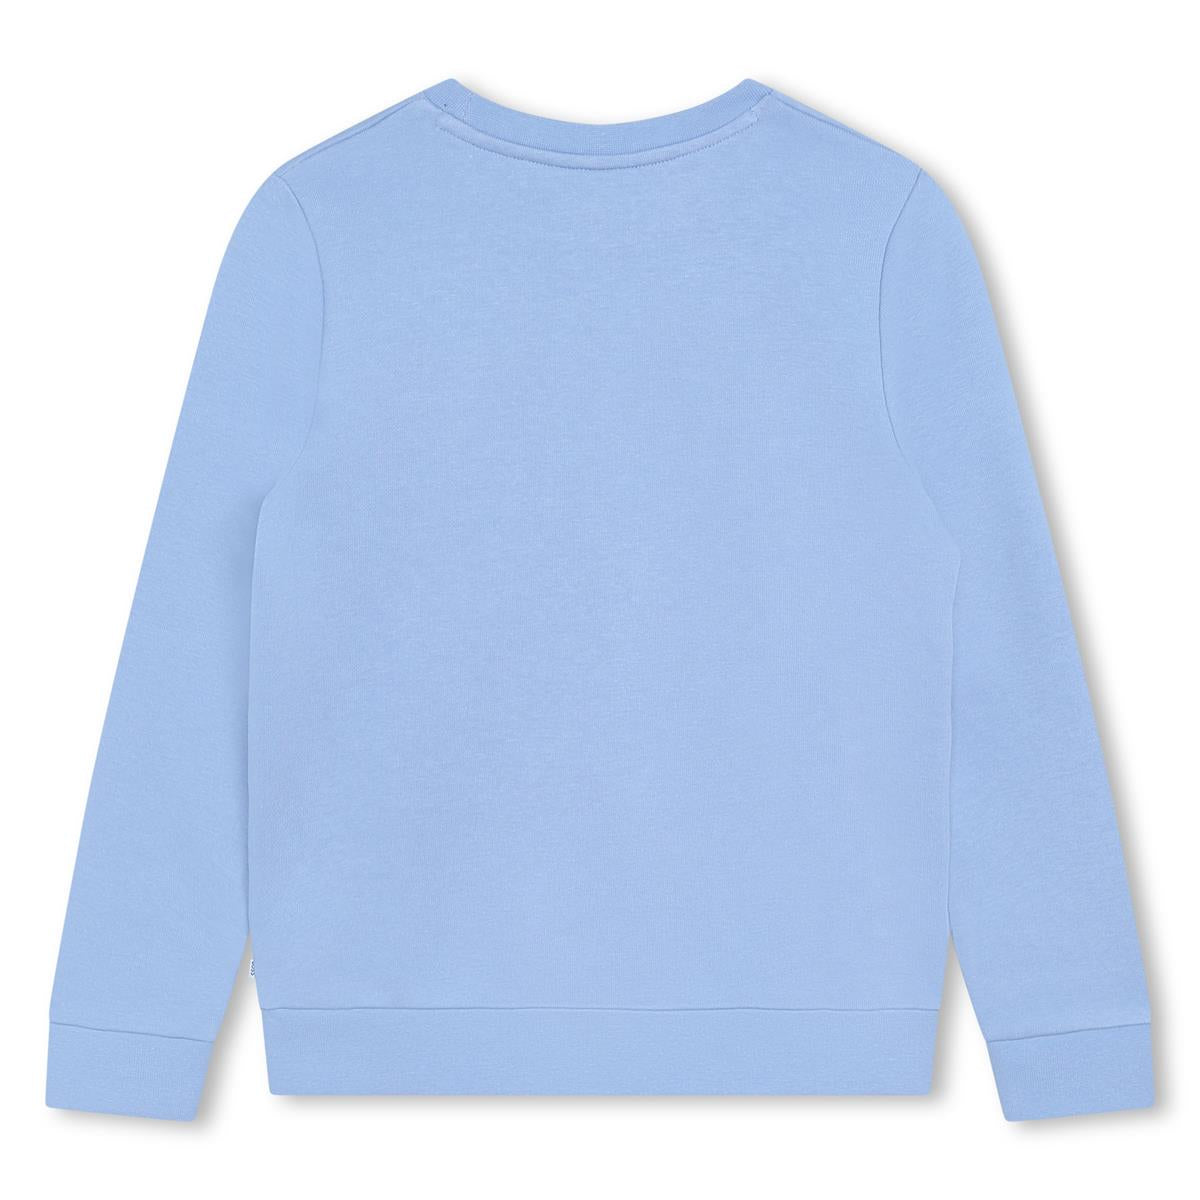 Boys Light Blue Logo Sweatshirt